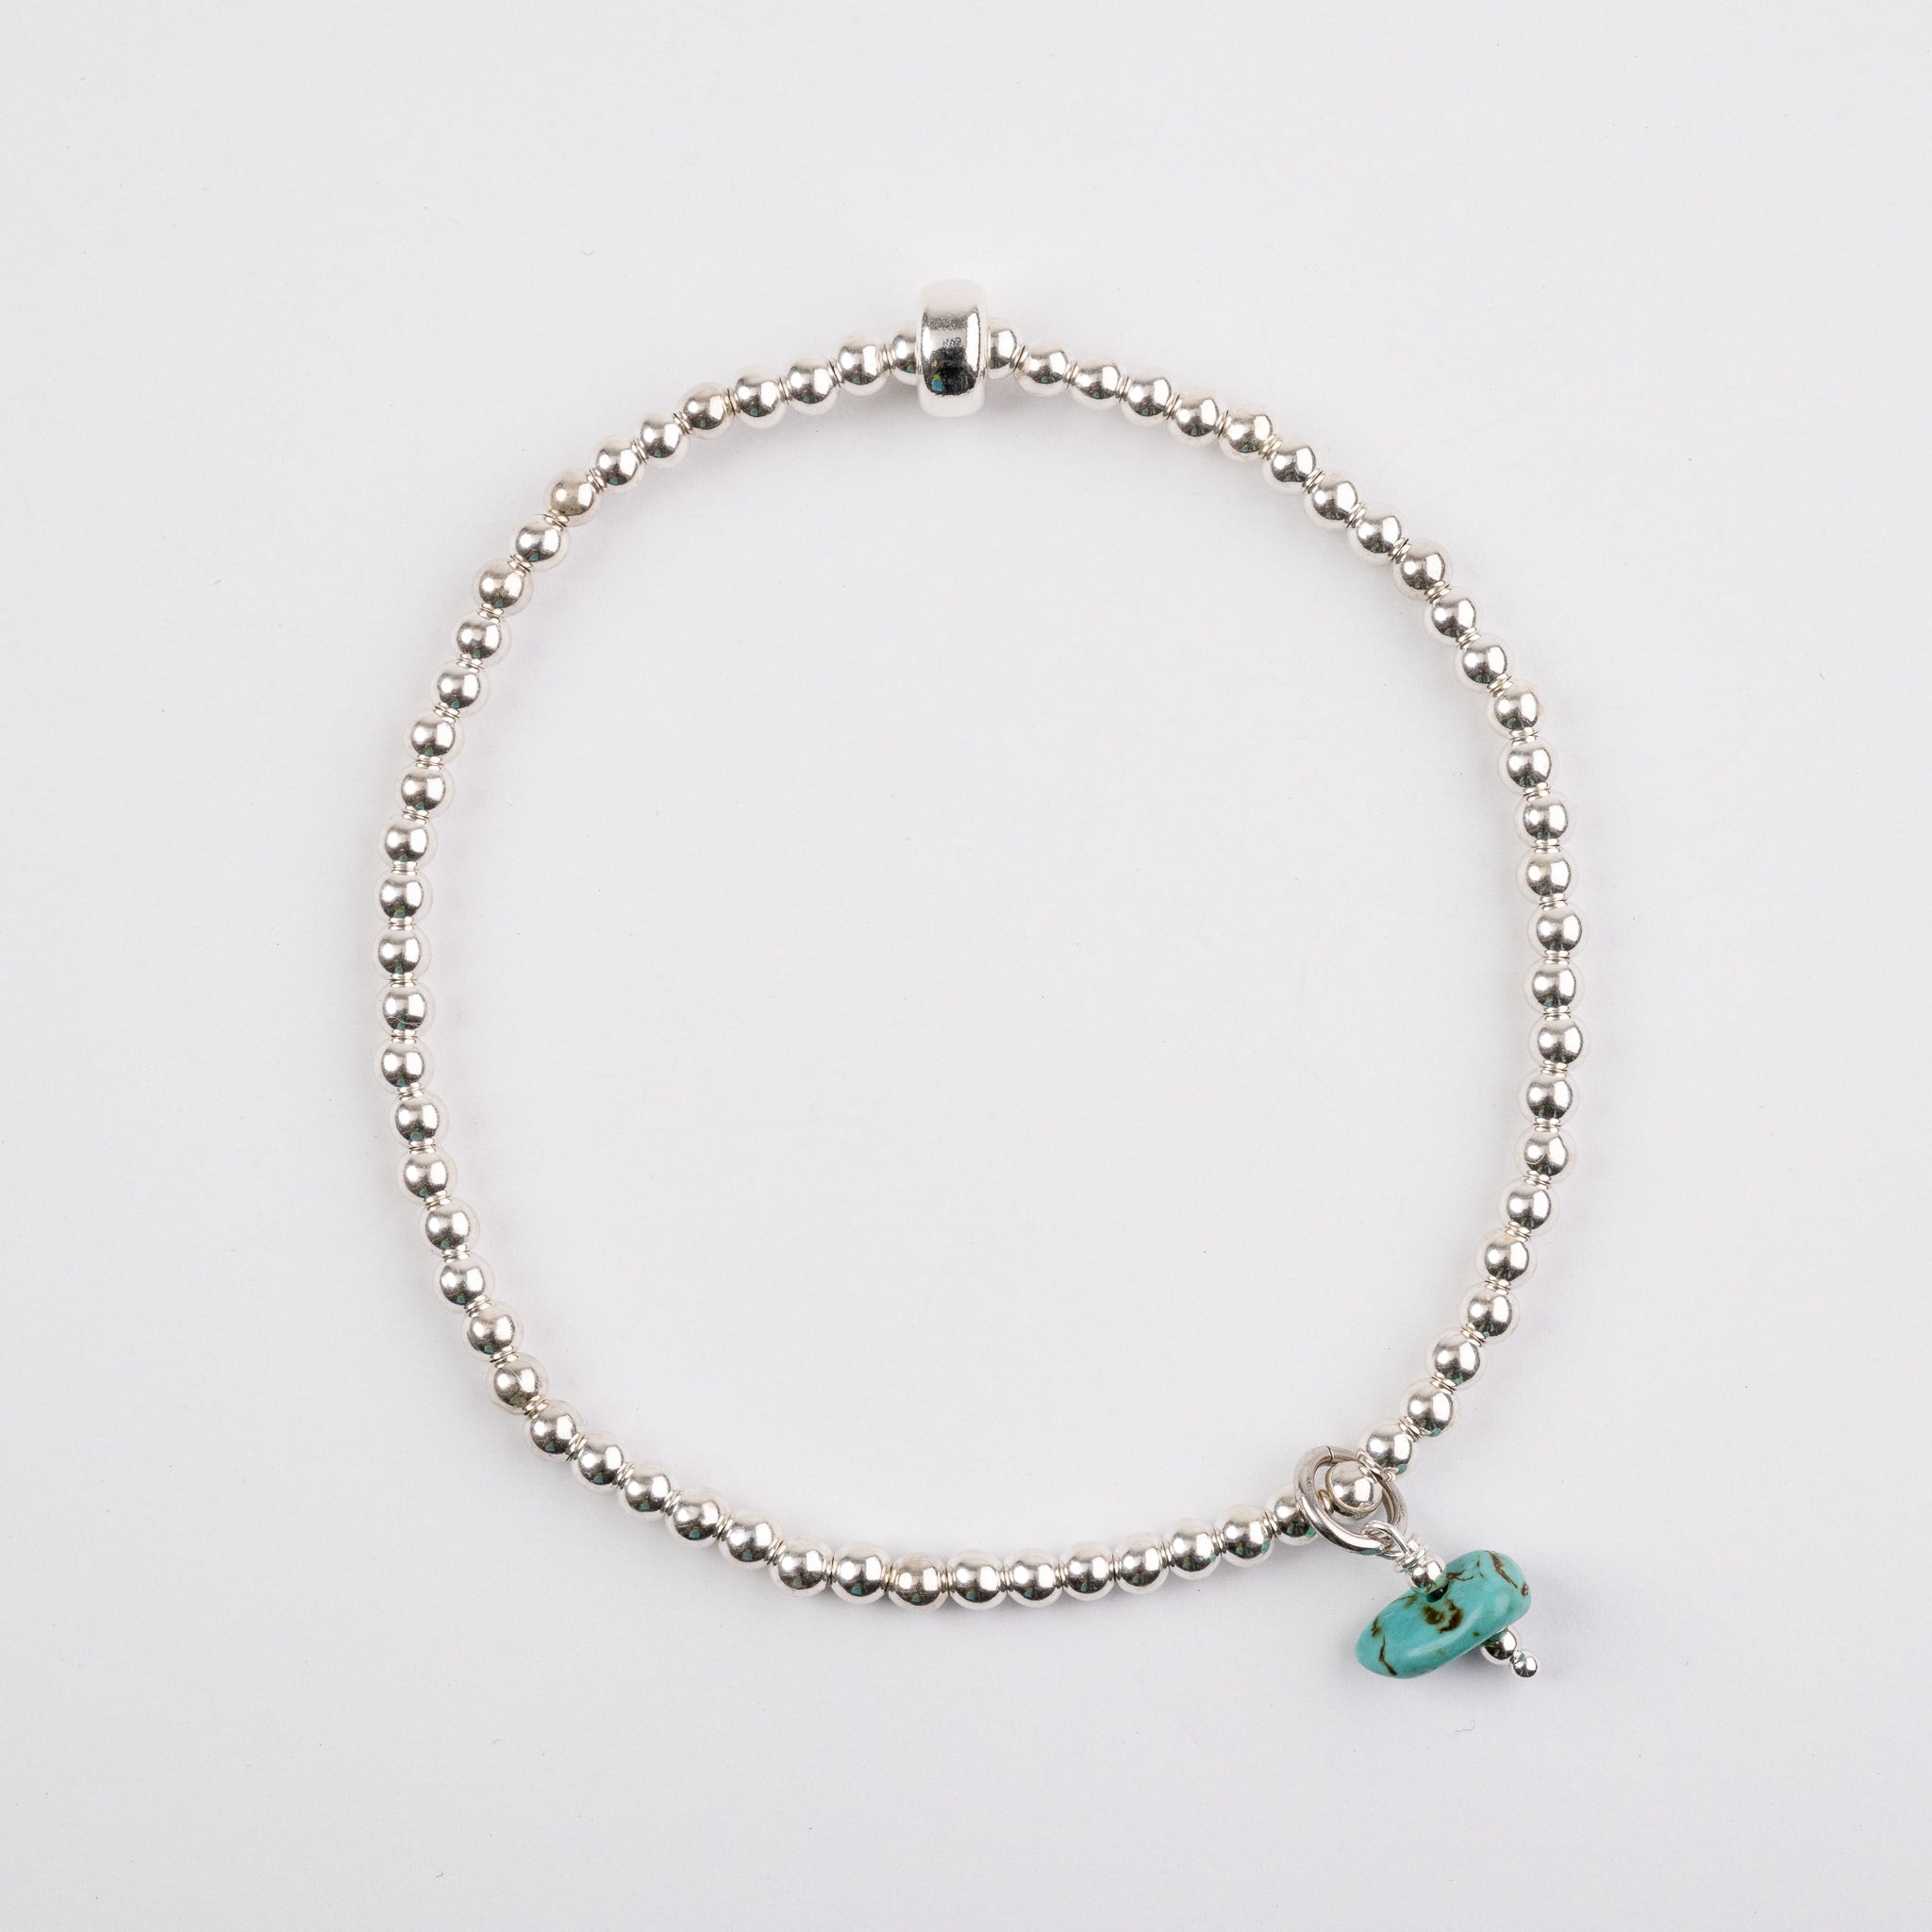 3mm Silver Turquoise Charm Bracelet